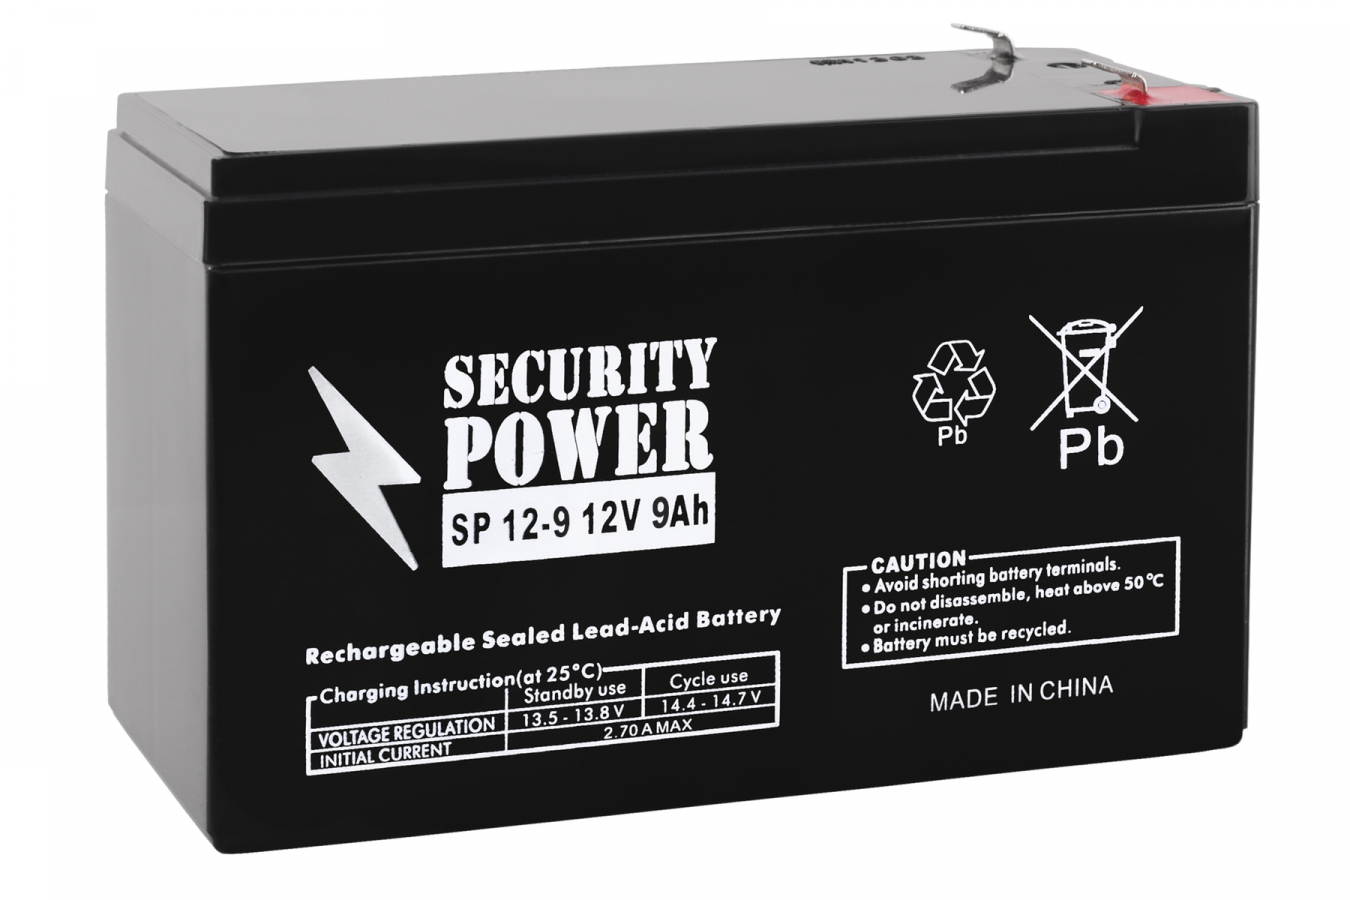    Security Power SP 12-9 F1